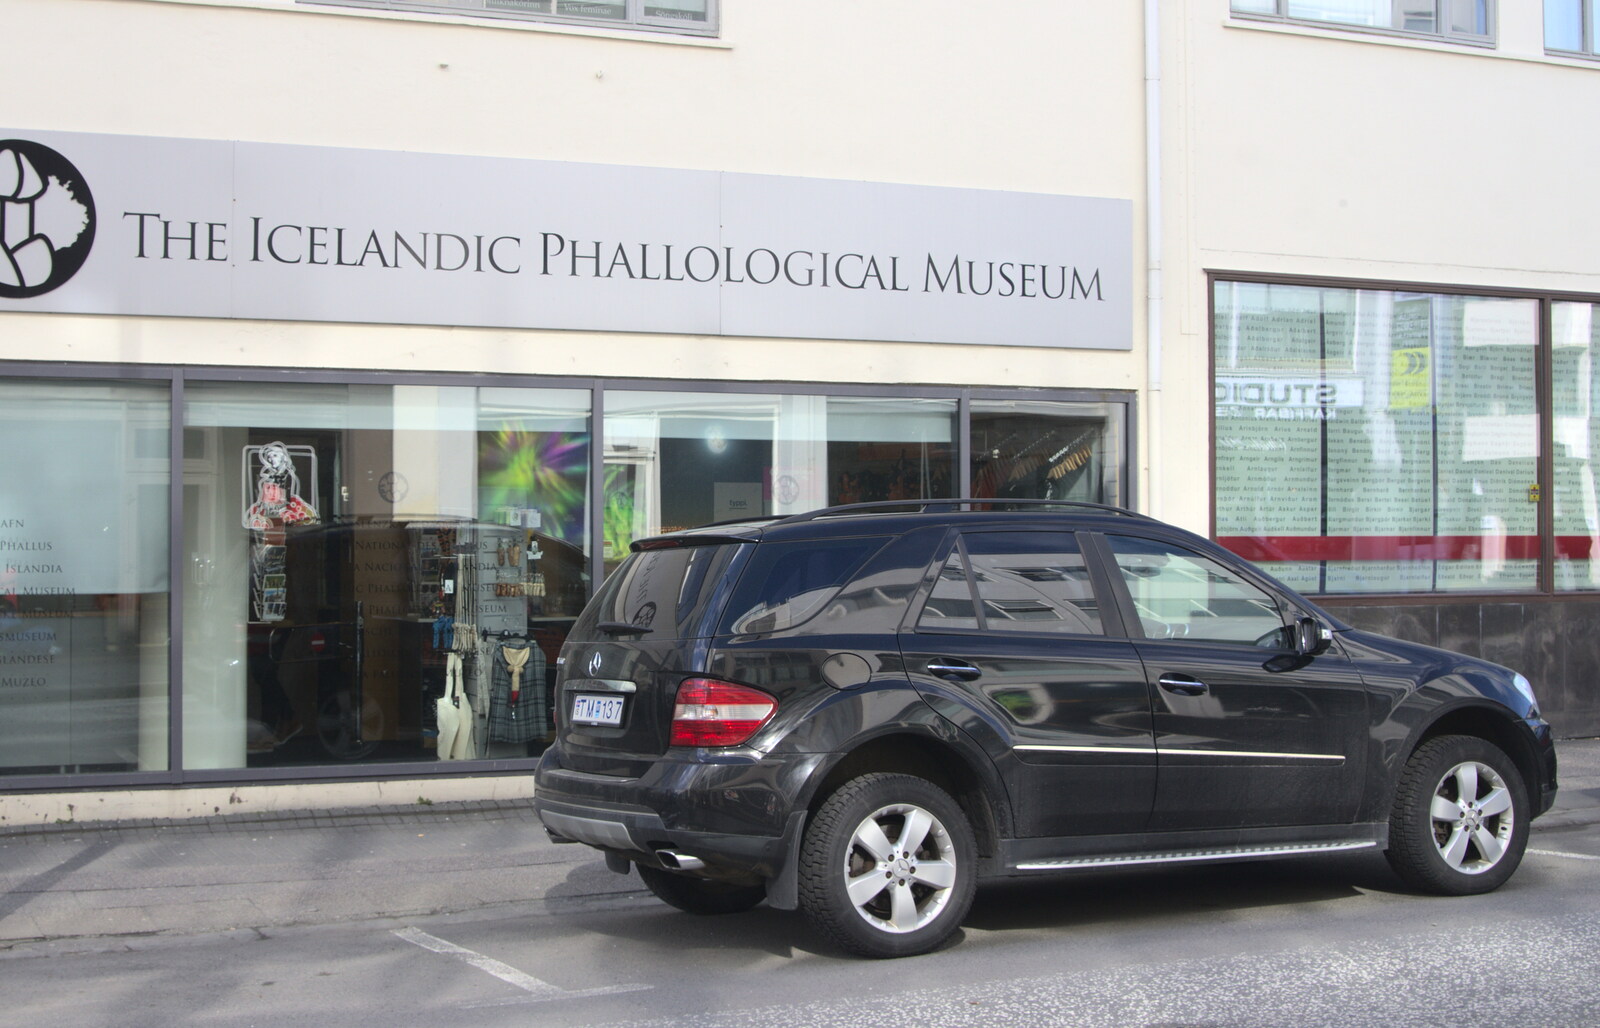 The Icelandic penis museum from Stríðsminjar War Relics, Perlan and Street Art, Reykjavik, Iceland - 23rd April 2017